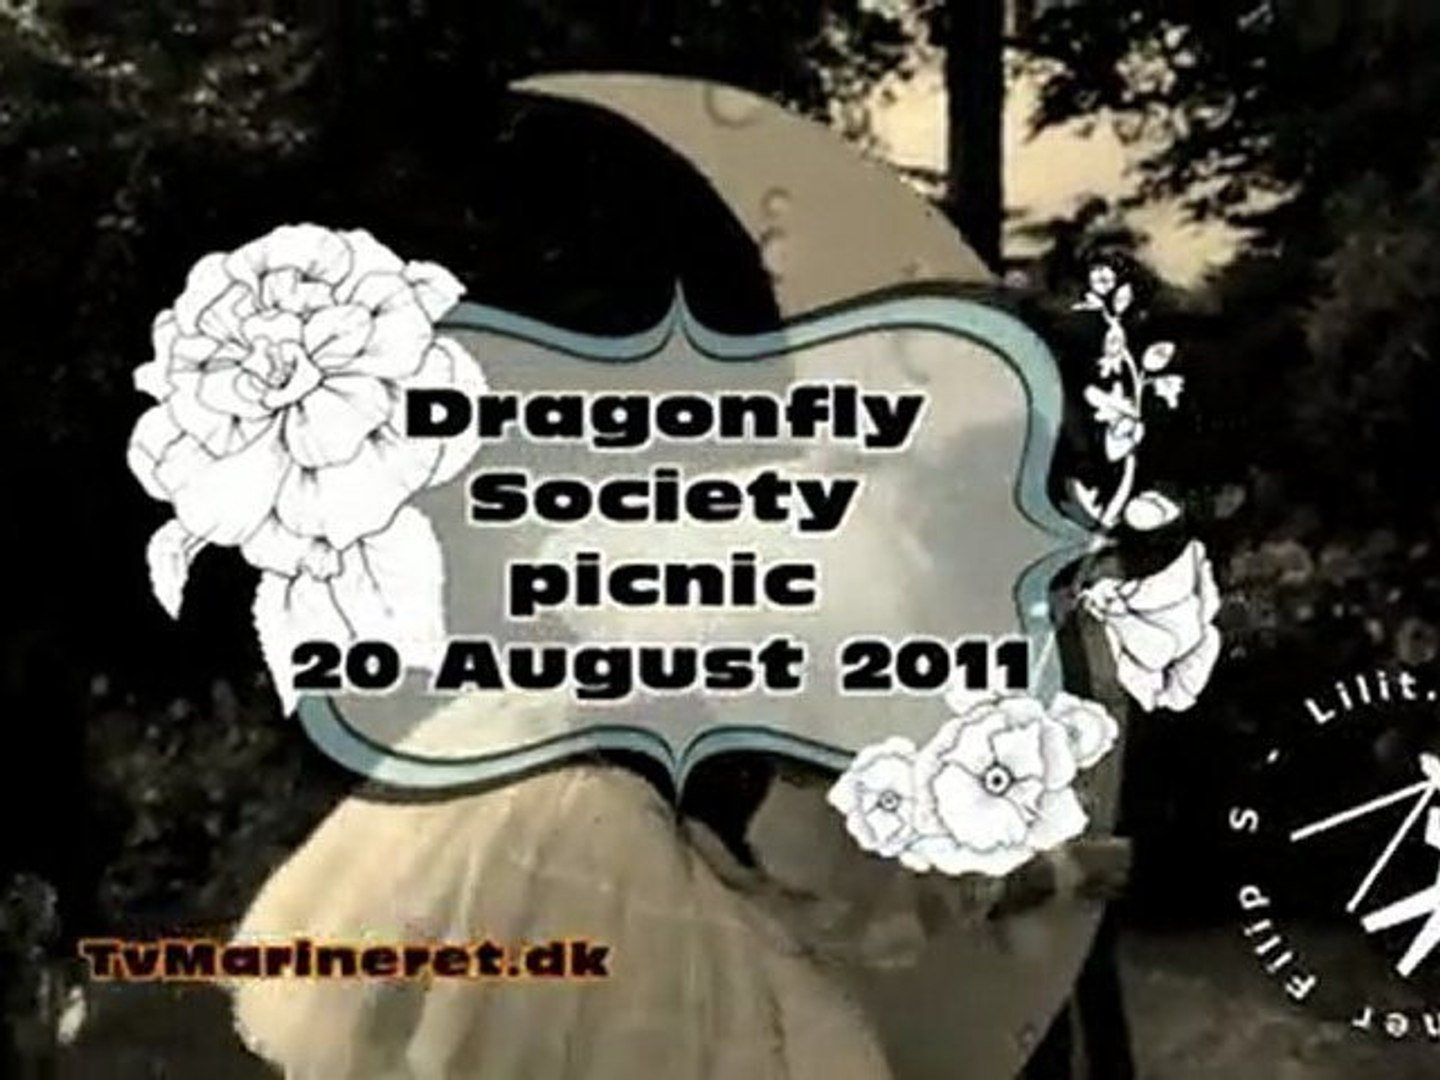 Dragonfly Society Picnic 2011-20 August. (Filip S - Lilit.dk)